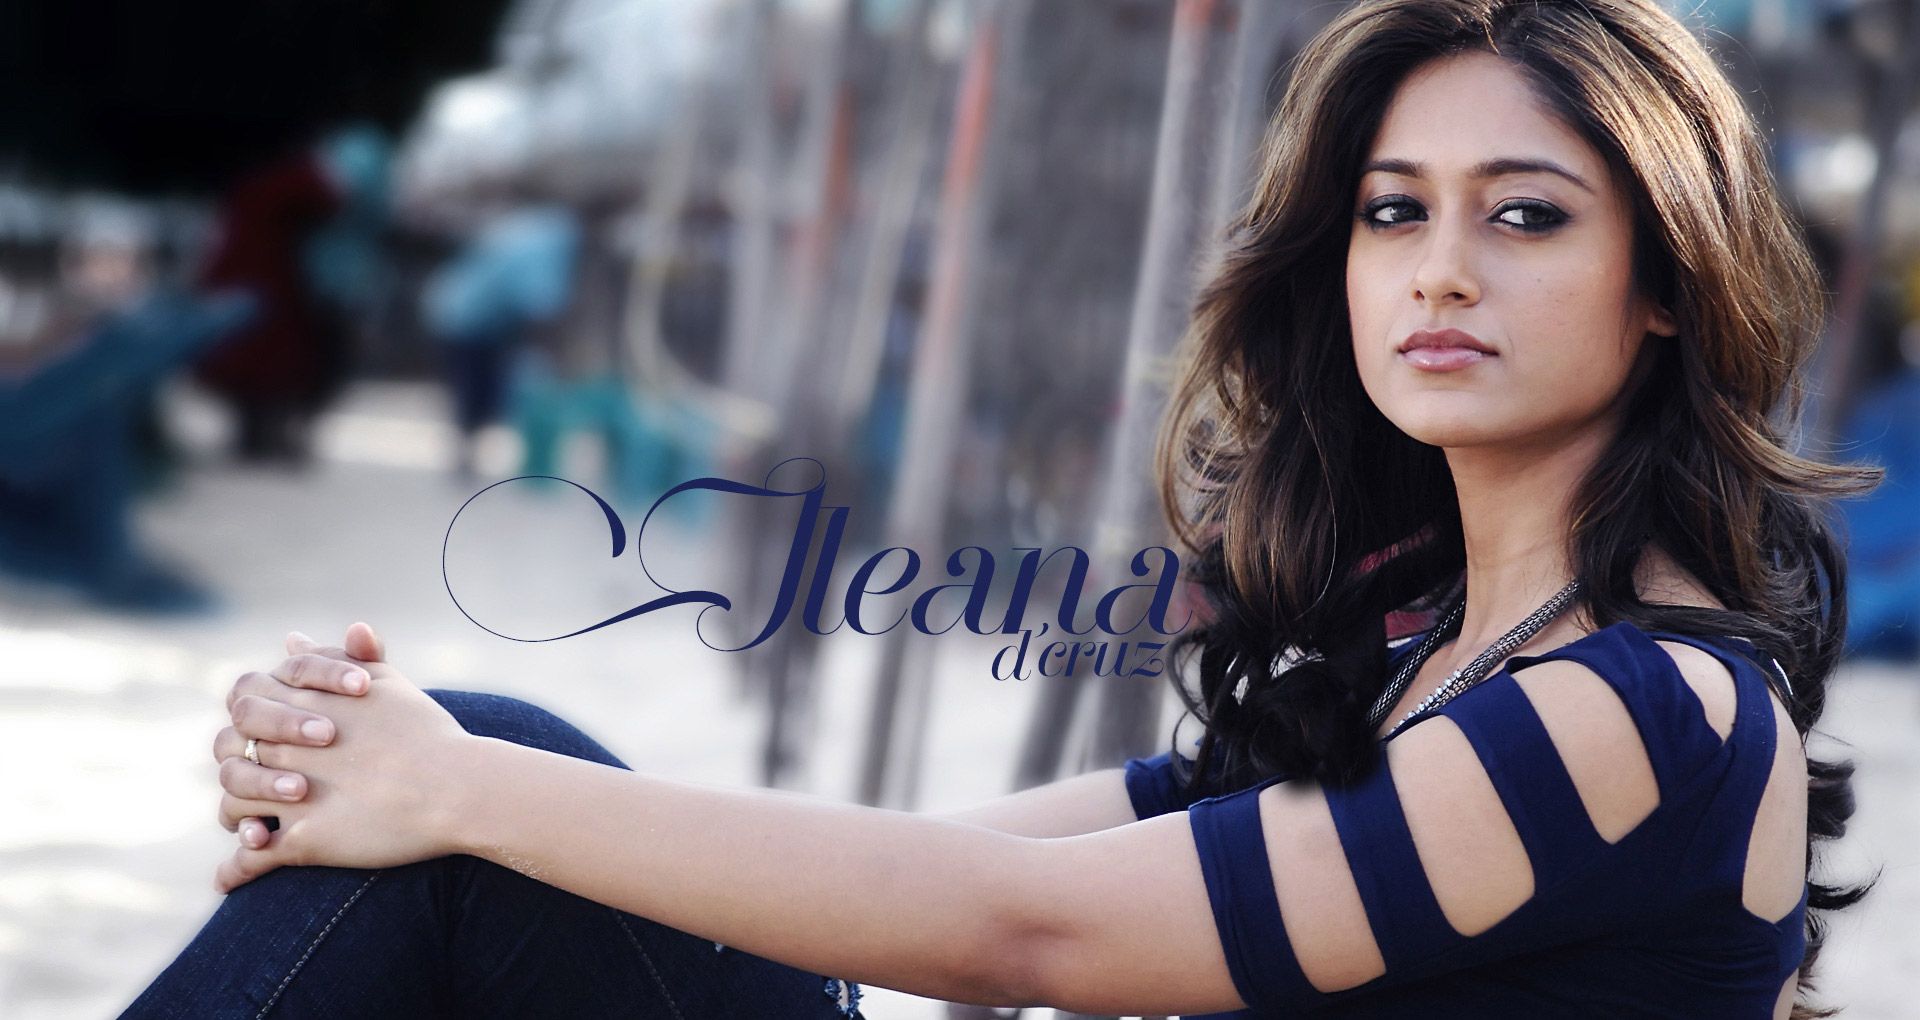 Gorgeous Bollywood Actress Hot And Sexy Ileana D'Cruz HD ...